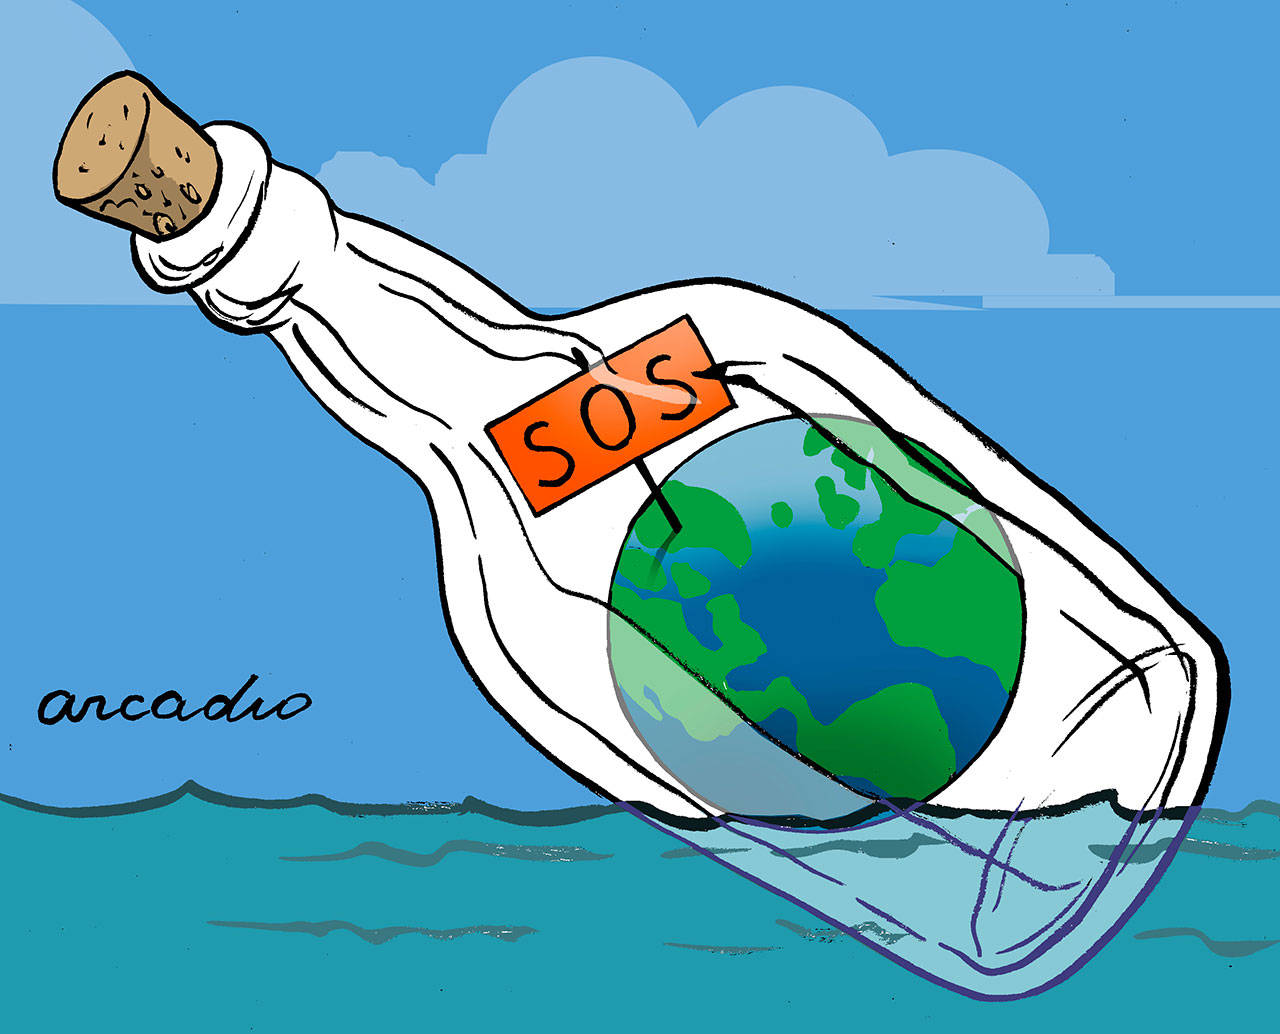 Today’s cartoon is by Arcadio Esquivel, Costa Rica.